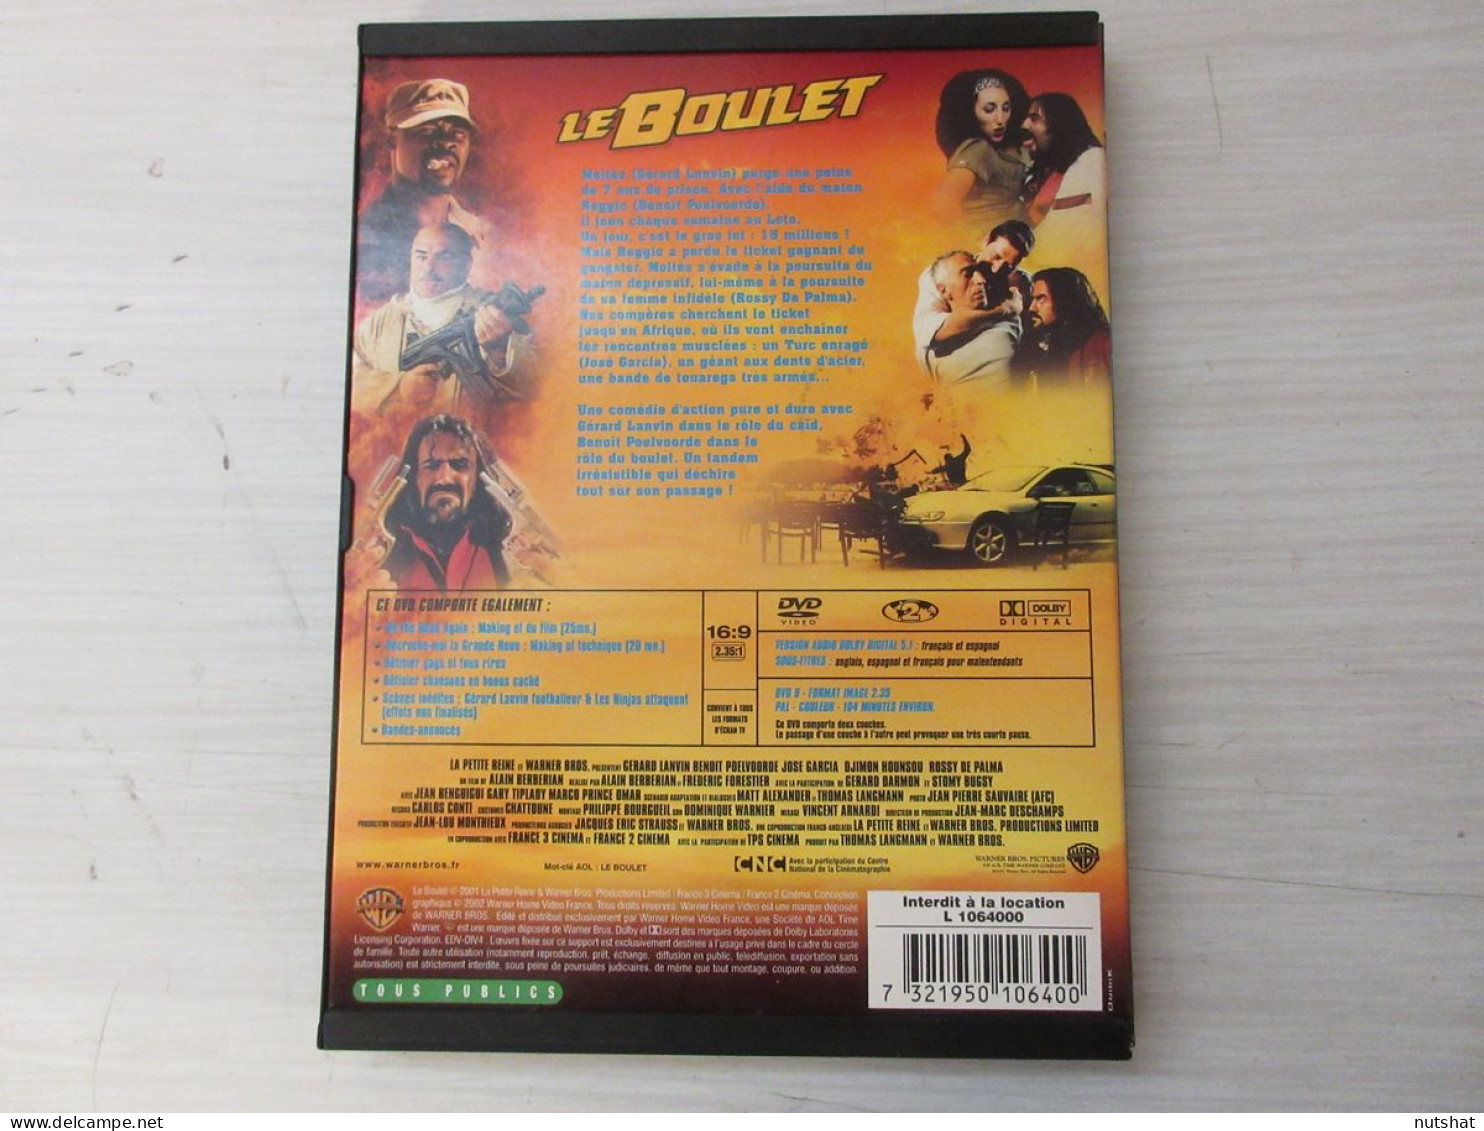 DVD CINEMA Le BOULET Gerard LANVIN Benoit POELVOORDE Jose GARCIA  2001         - Comedy